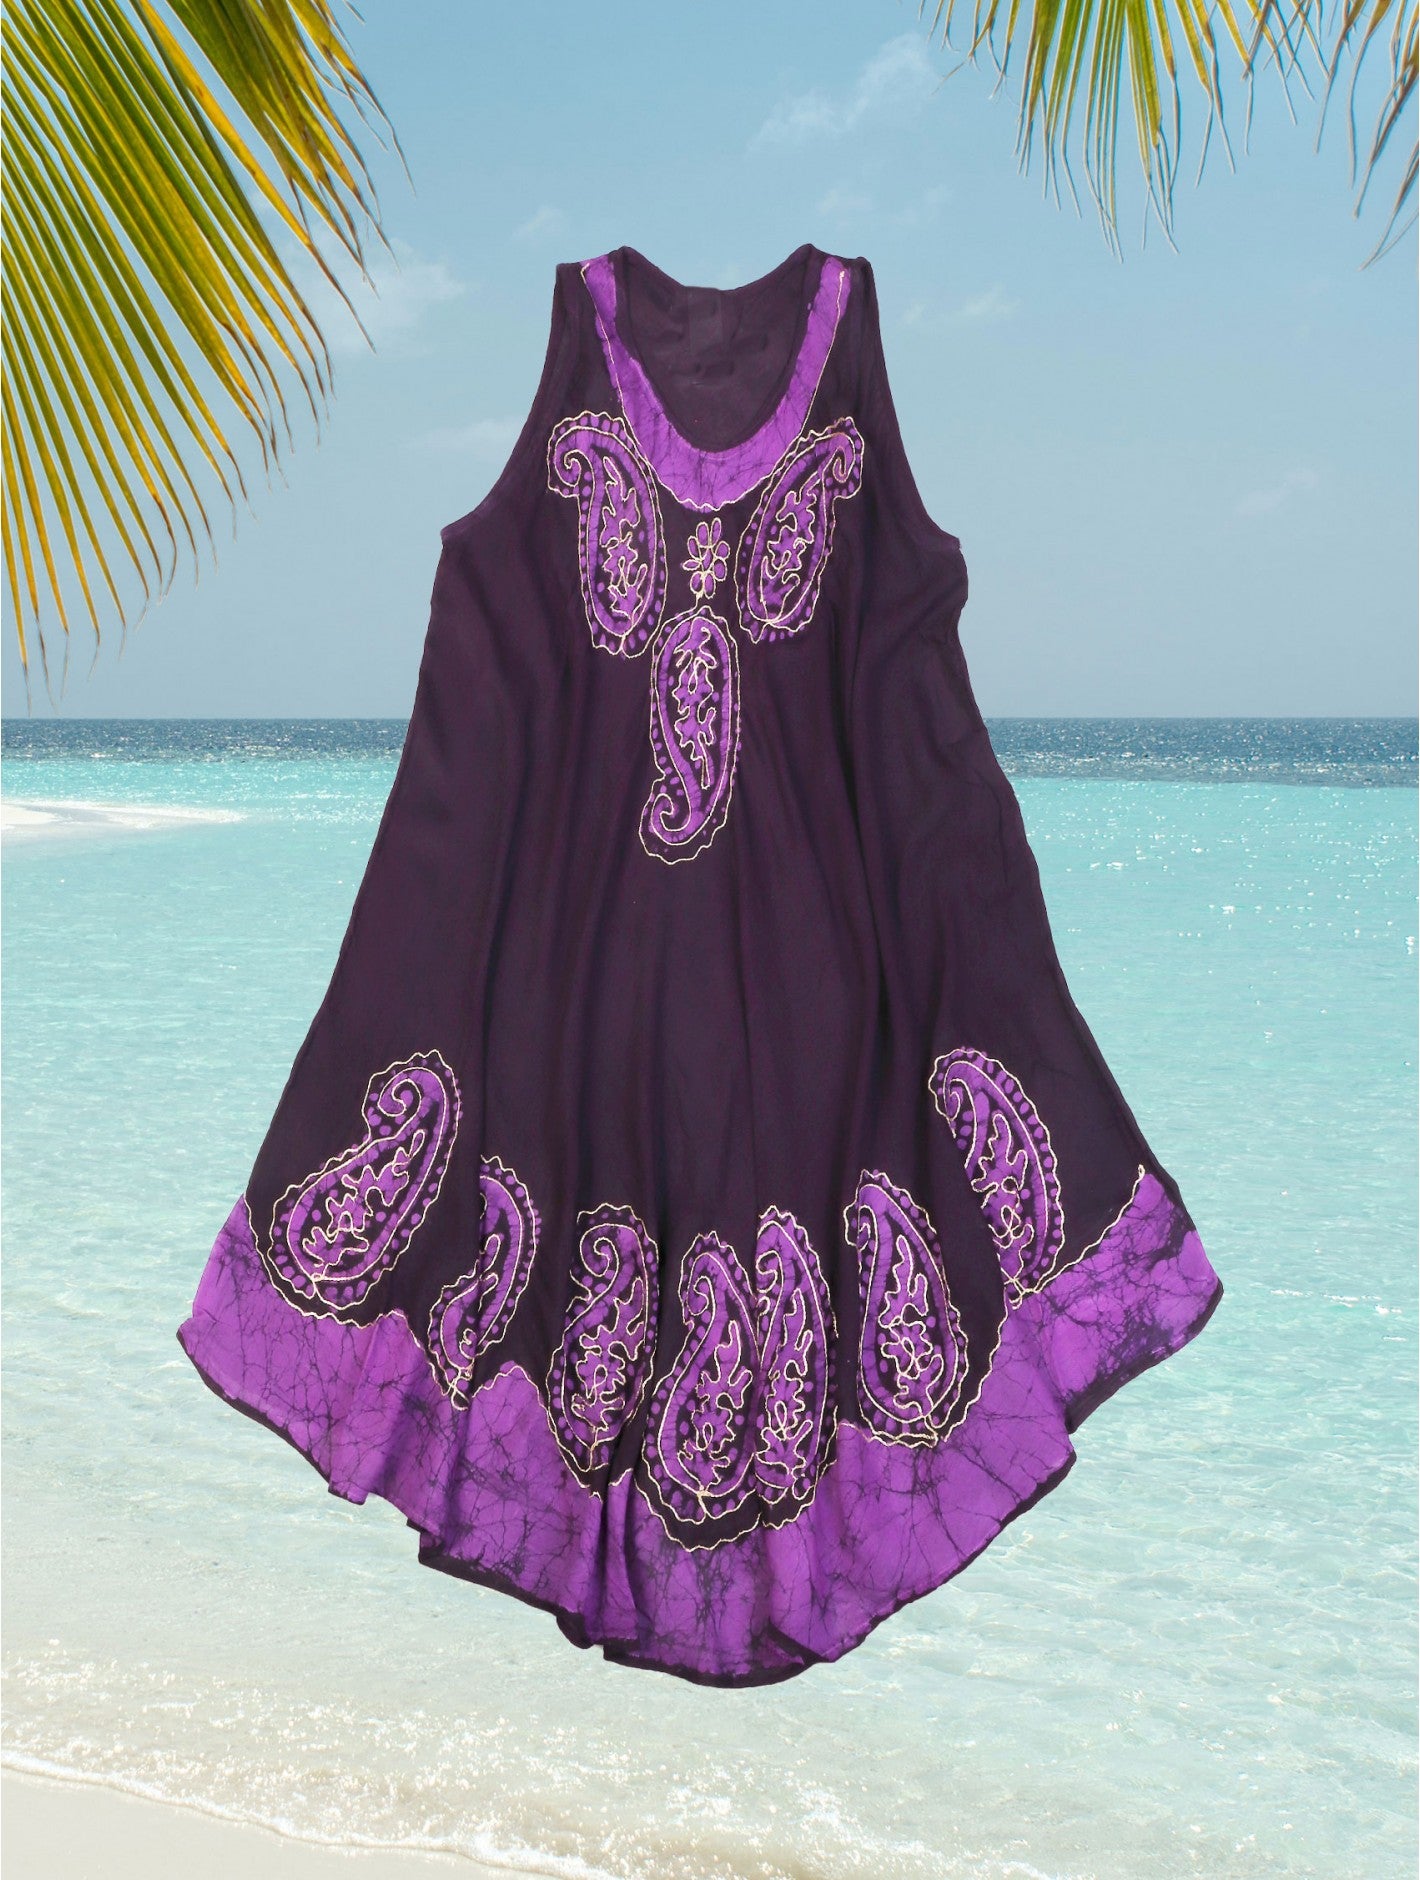 SALE Purple Embroidered Sun Dress